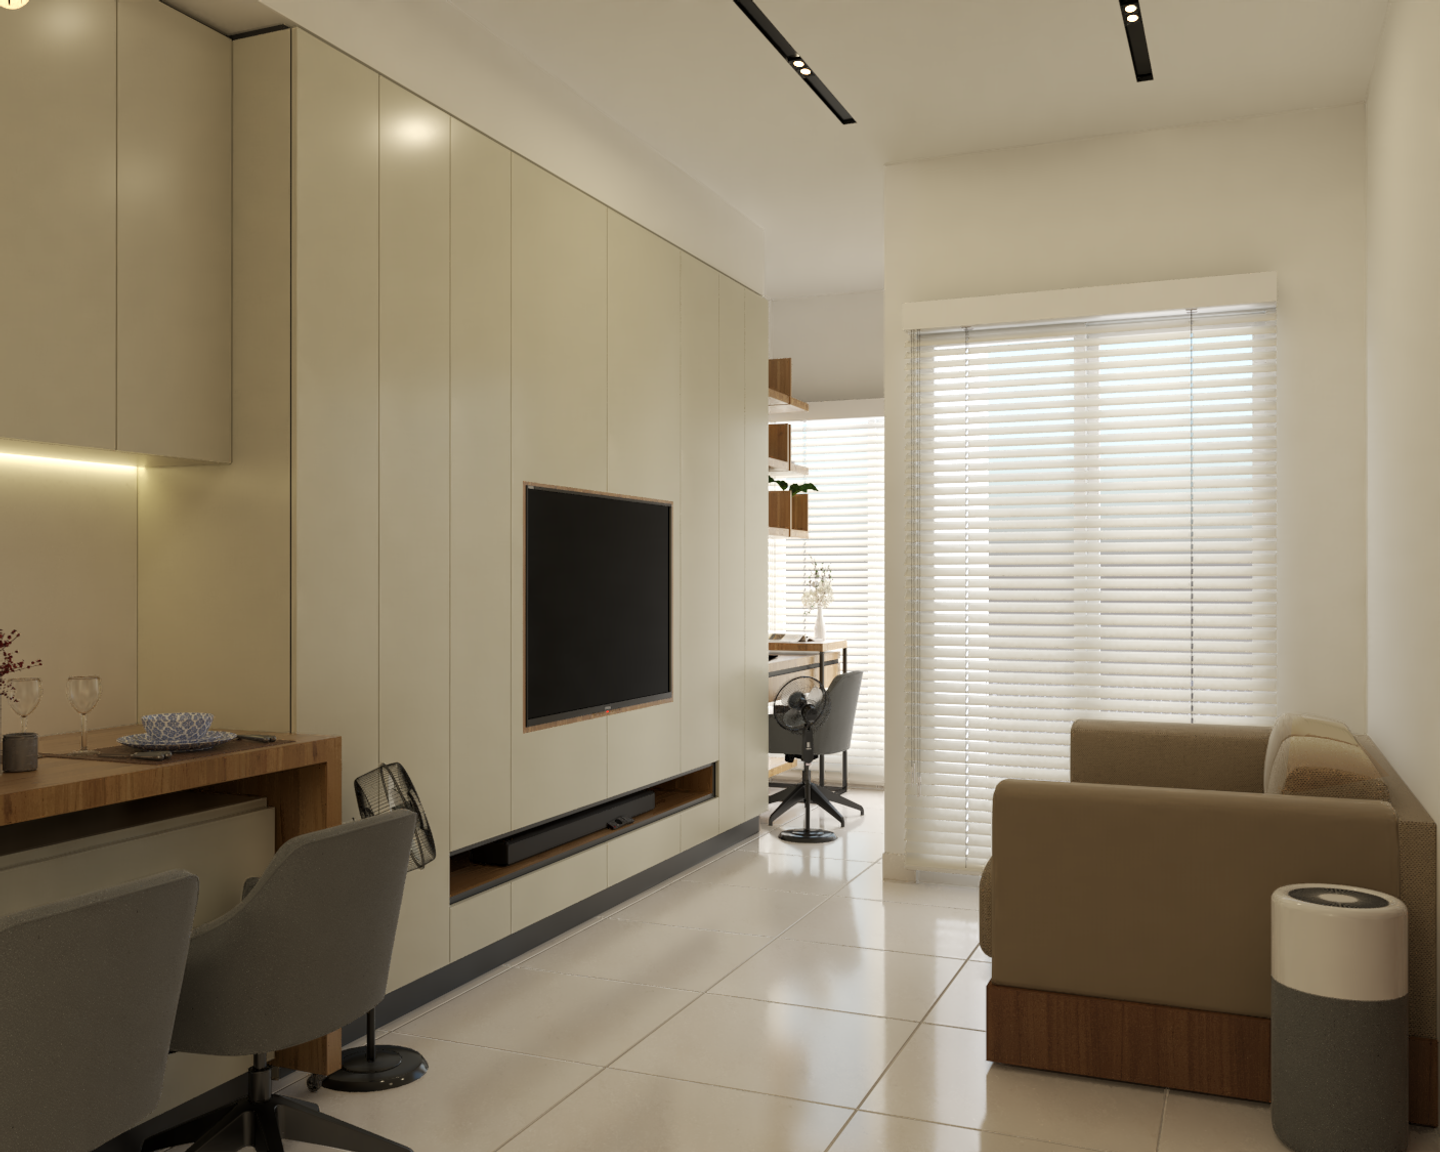 TV Panelling Modern Living Room Interior Design with Track Lights - Livspace